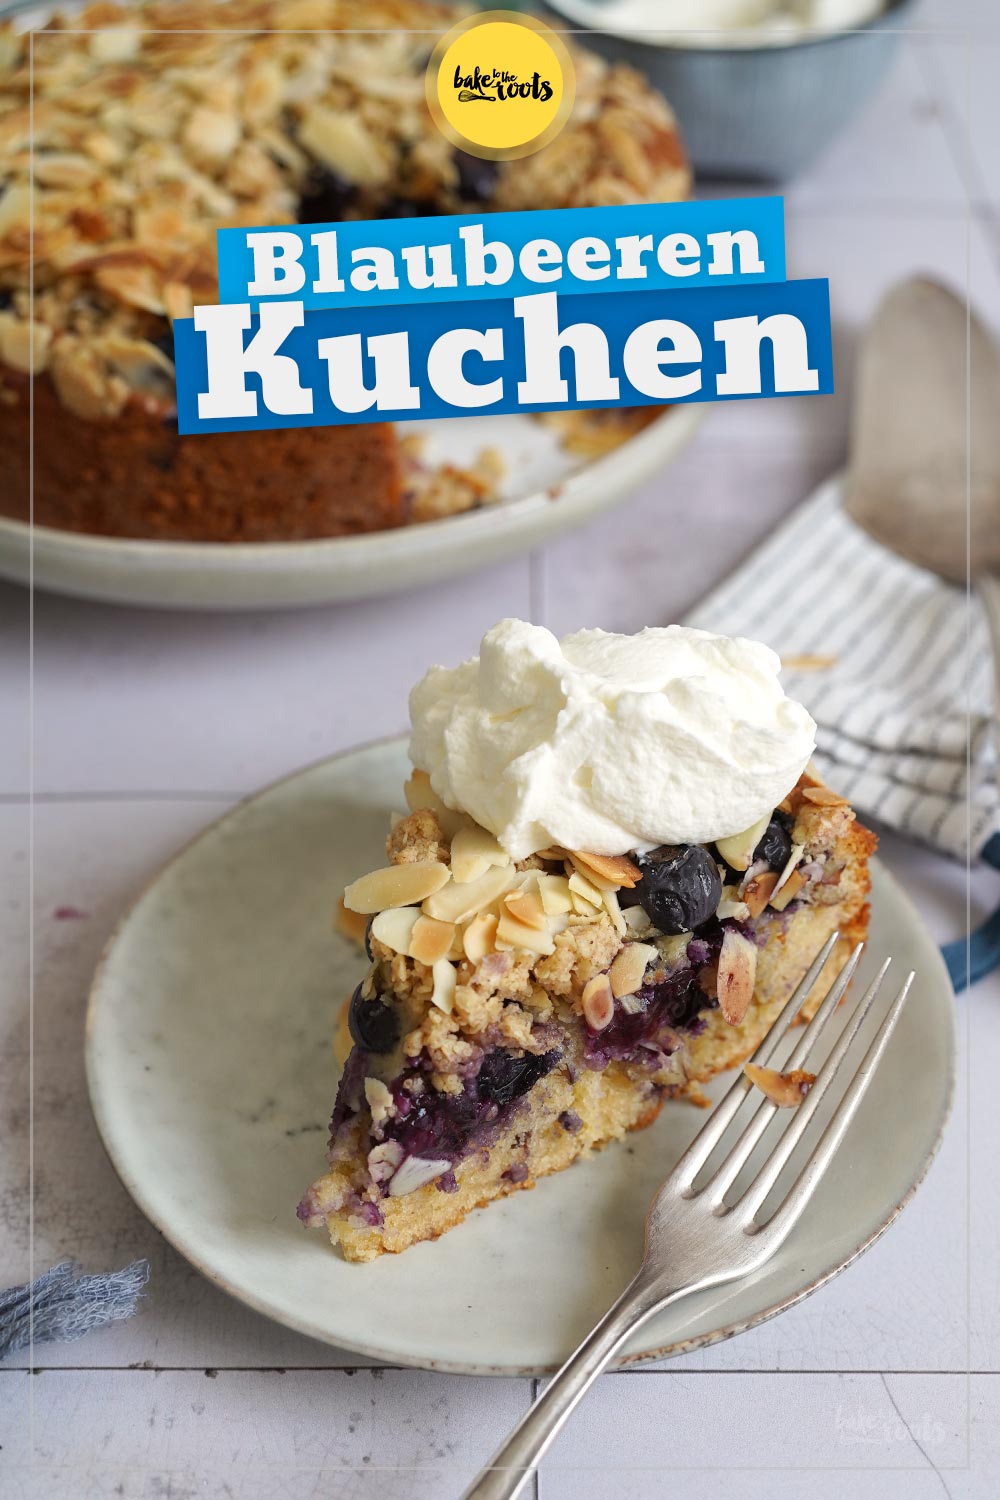 Blaubeeren Kuchen | Bake to the roots